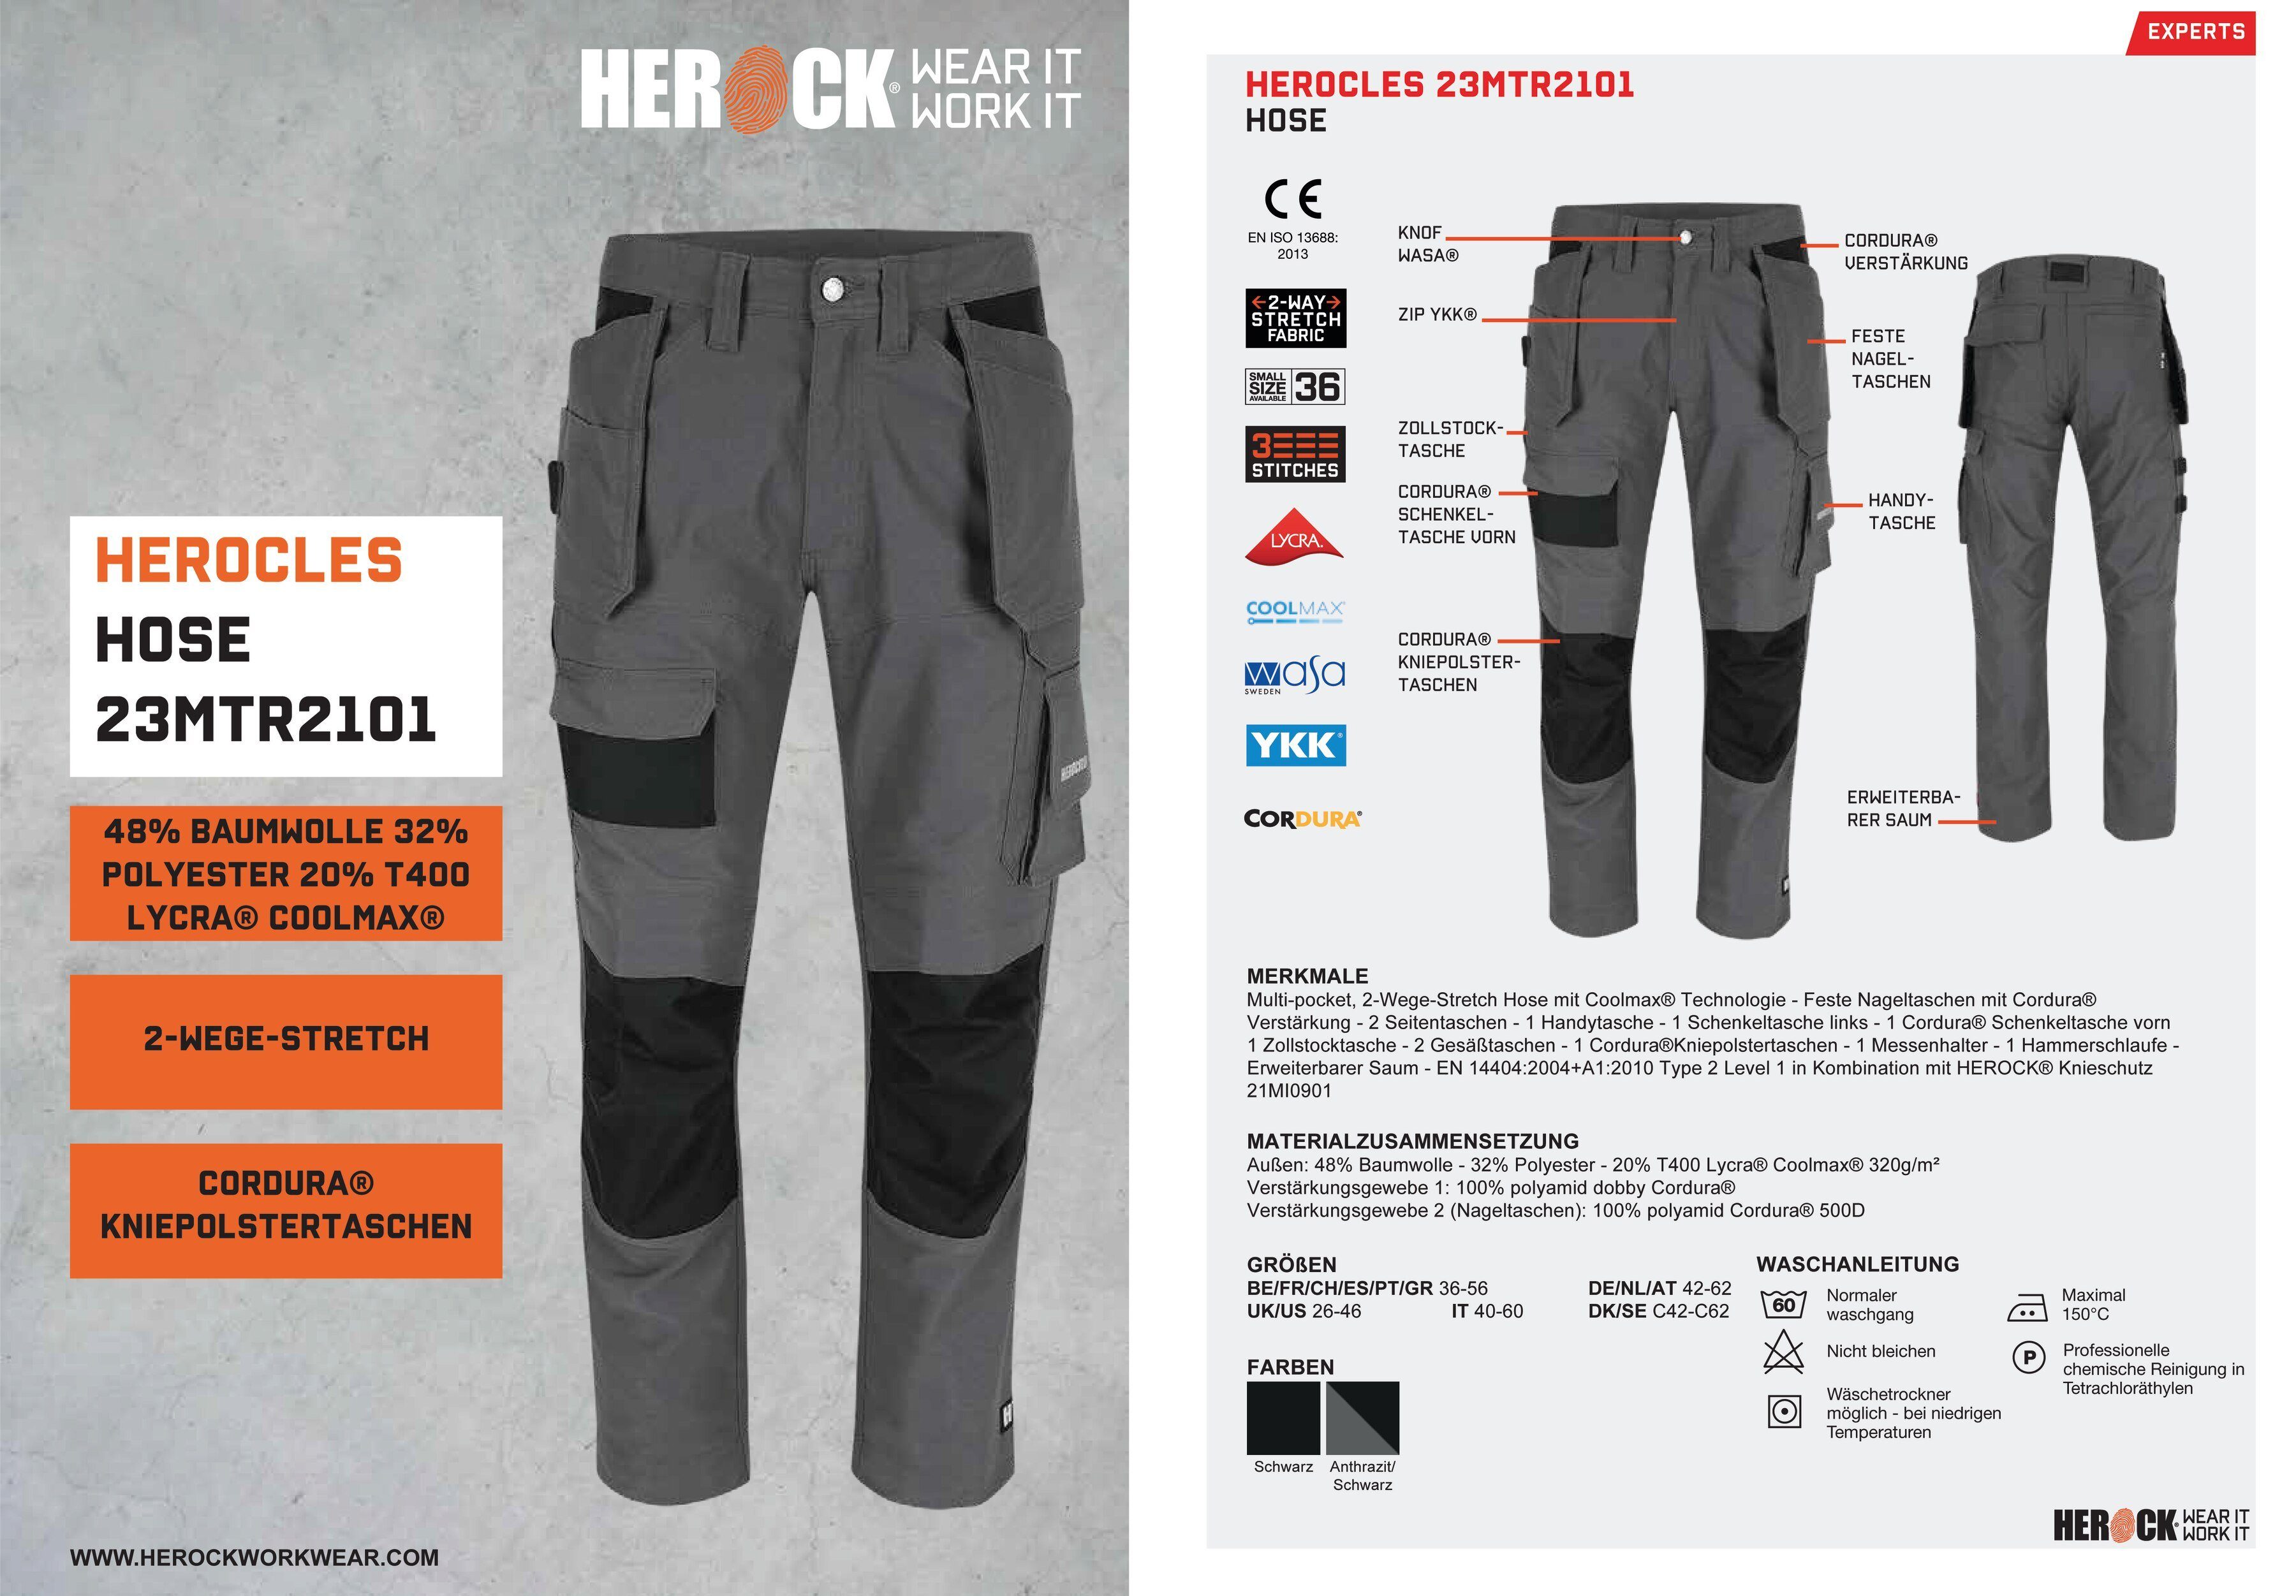 Nageltaschen feste Technologie) grau Herock HEROCLES Stretch, Arbeitshose sehr robust, Multi-pocket, (Coolmax®